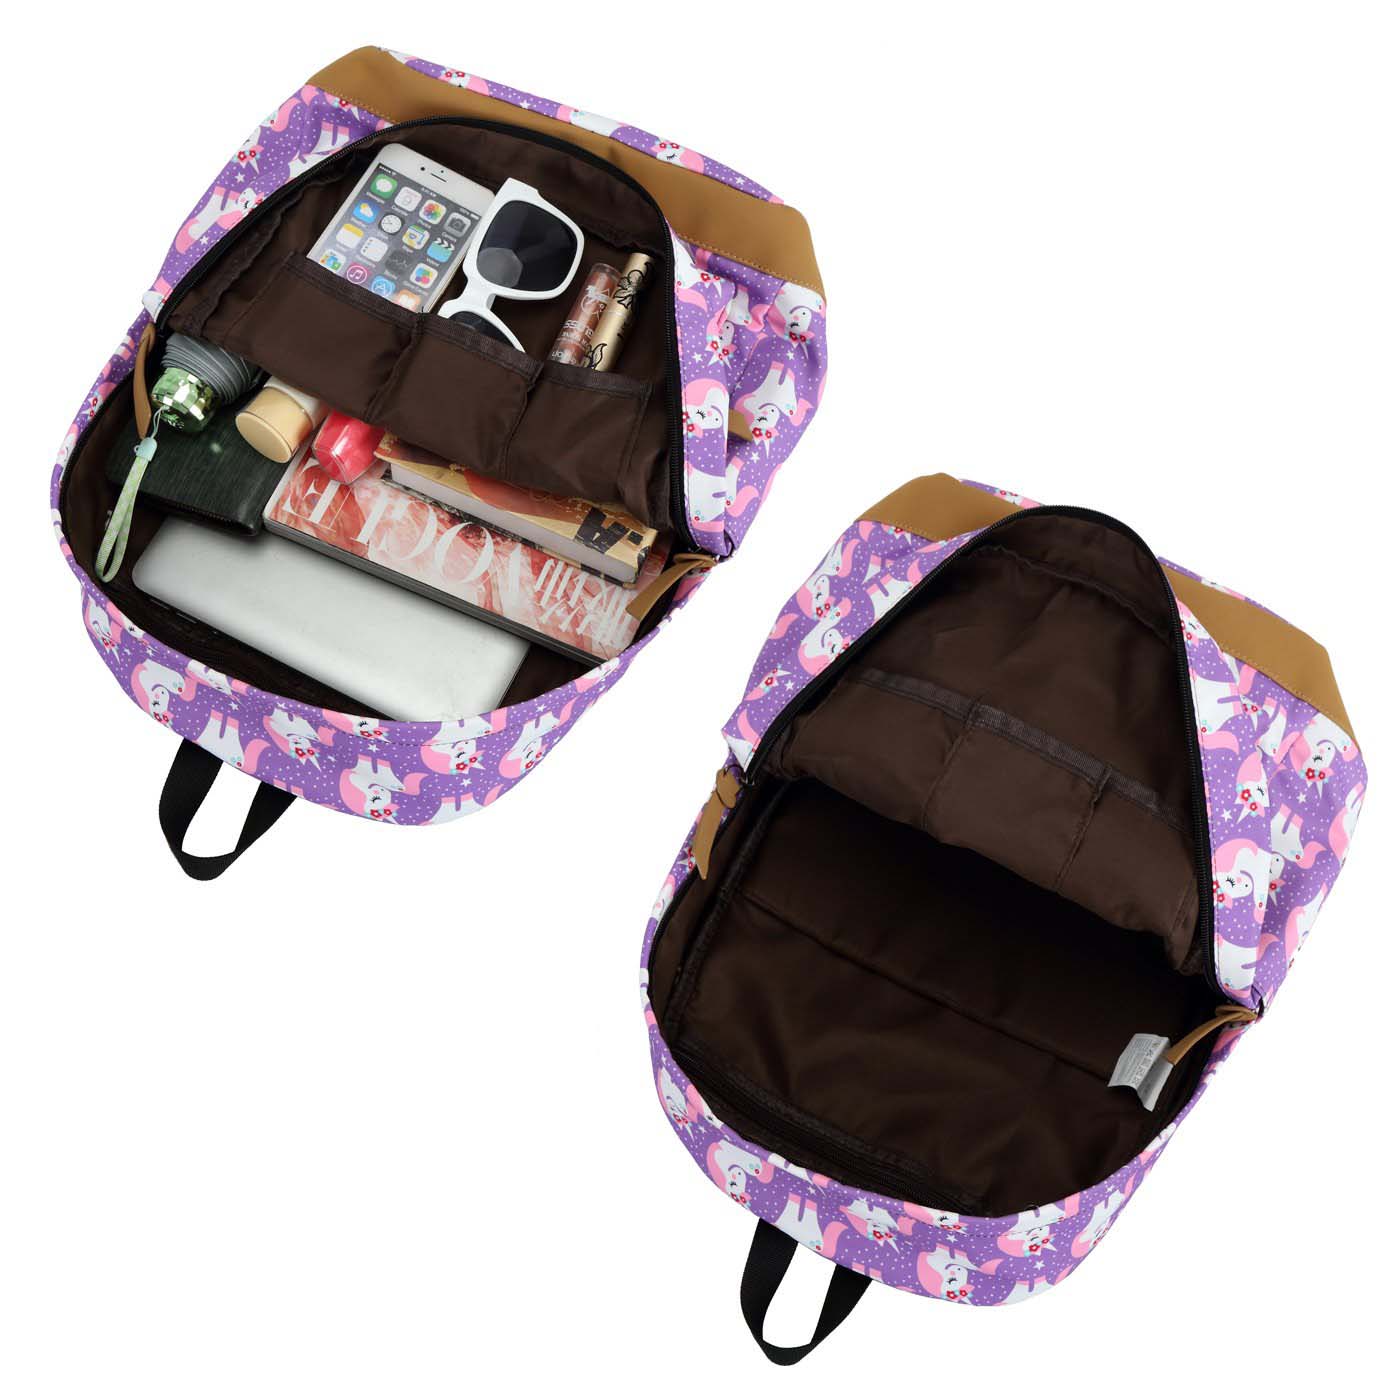 Manufacturing Companies for Children Trolley School Bag - School Backpack for Girls Cute Teens School Bag Bookbags Set Travel Daypack – Twinkling Star